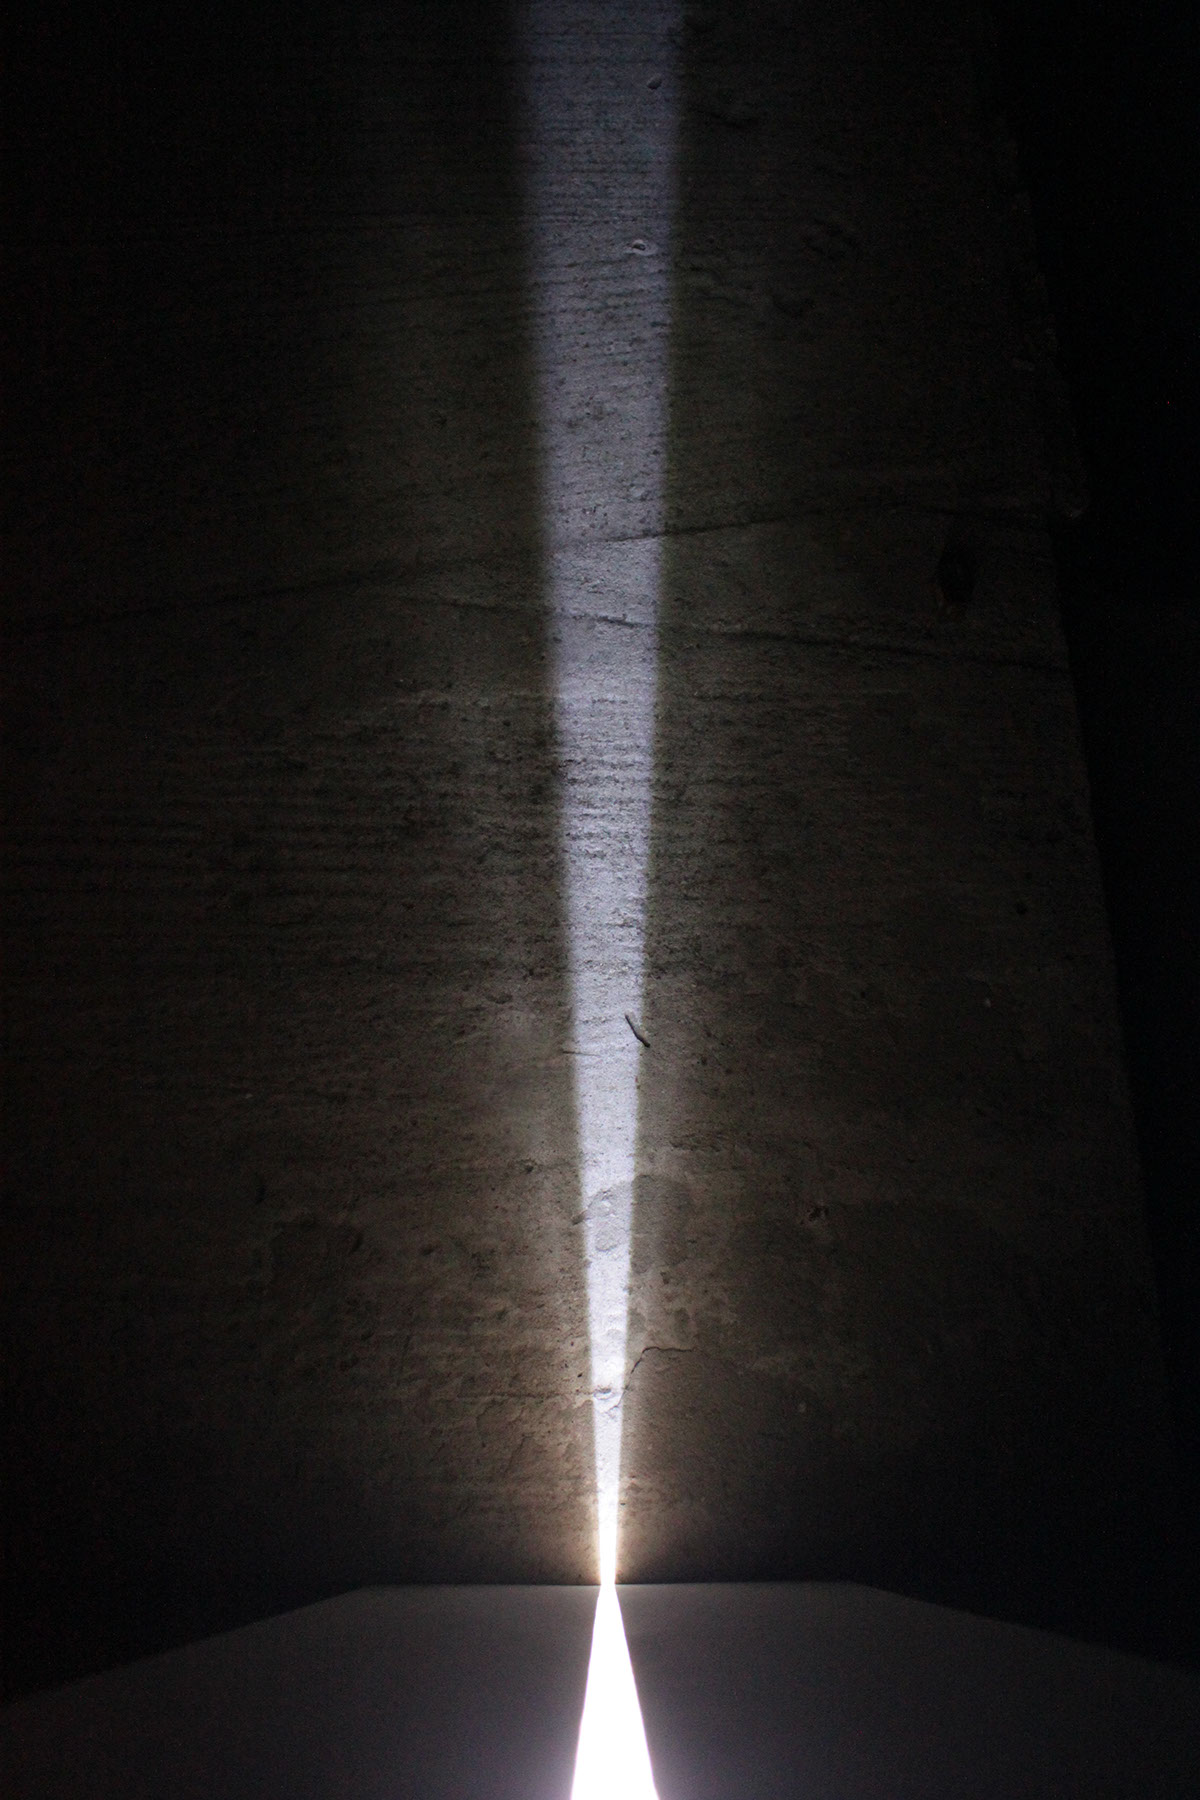 Lamp light lamps shadow lighting toronyi peter top eliza mikus